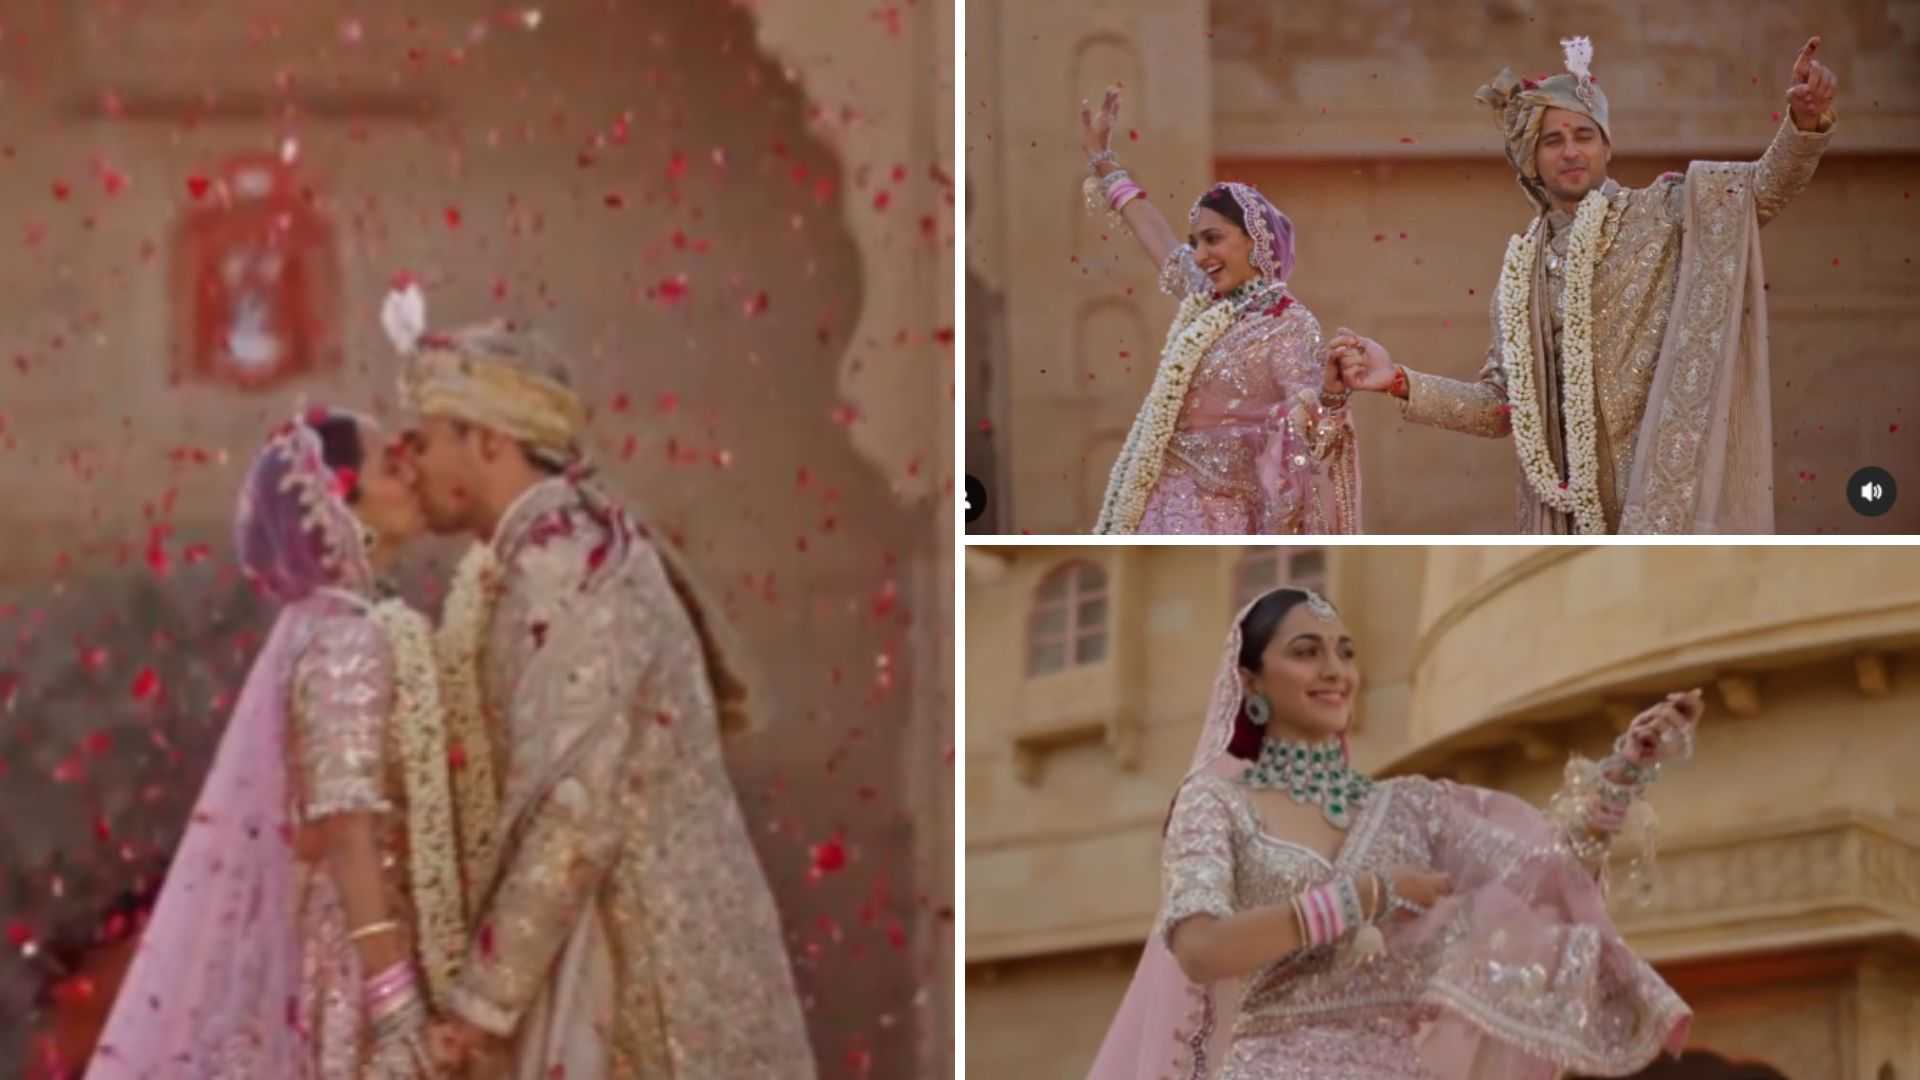 Kiara Advani dances down the aisle, Sidharth Malhotra passionately kisses his bride in this fairytale wedding teaser